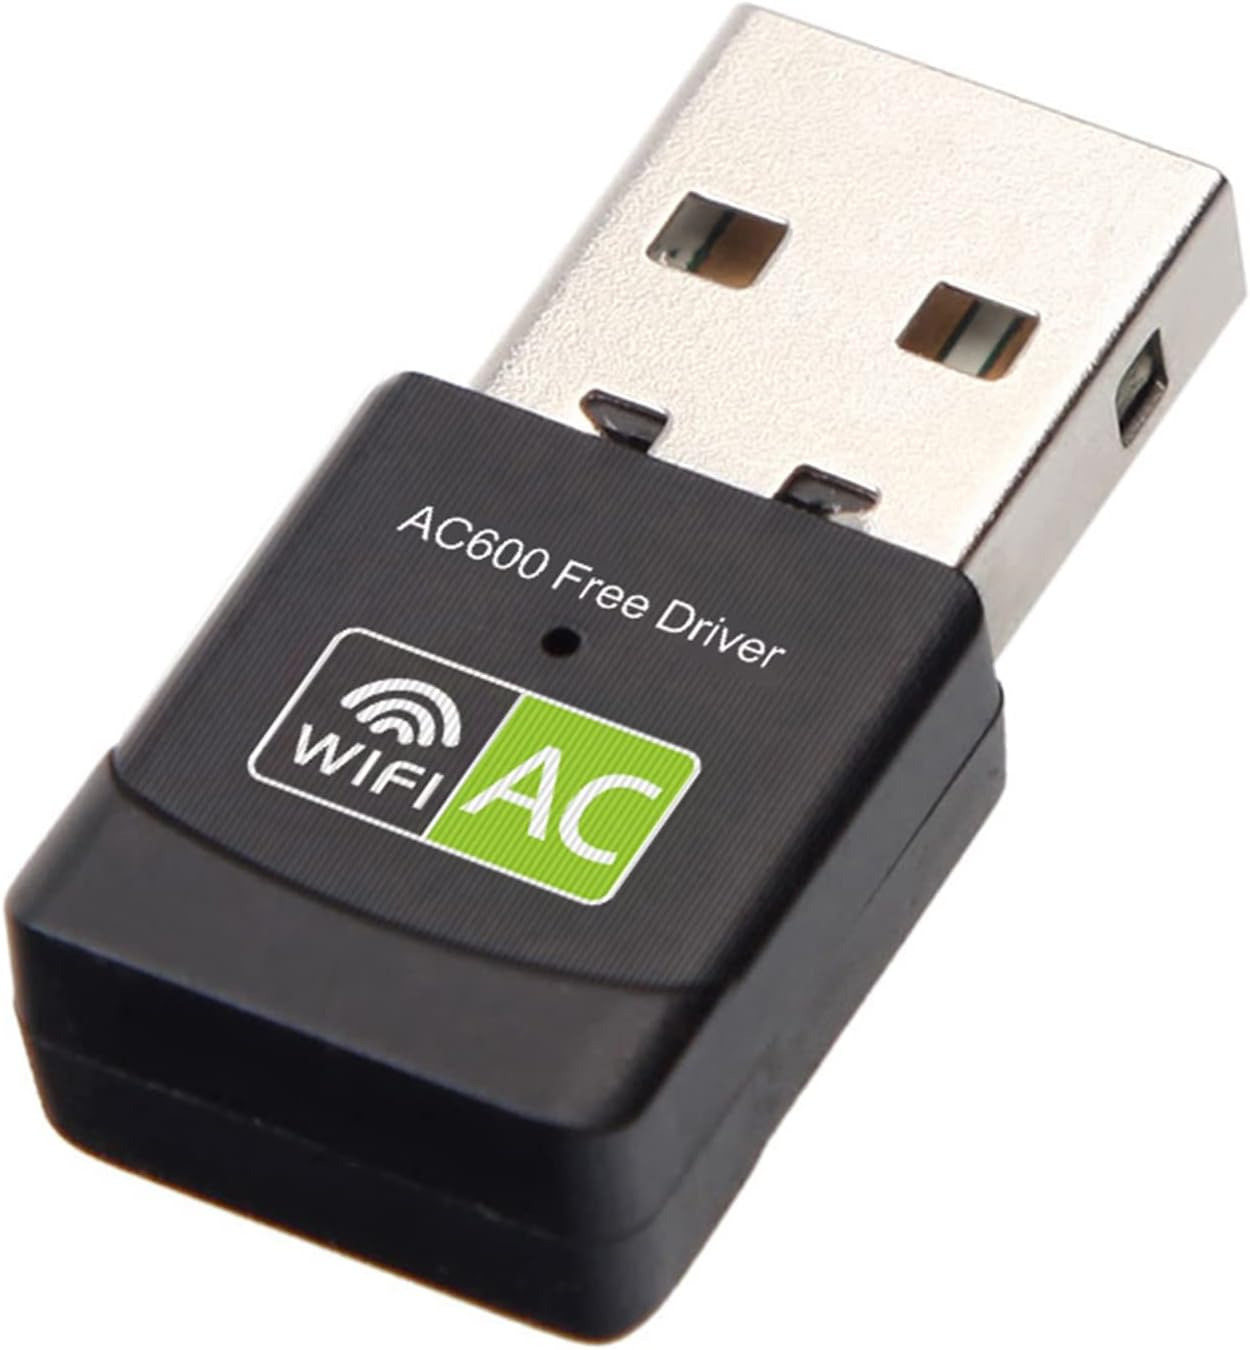 Free Driver USB Wifi Adapter for PC, AC600M USB Wifi Dongle 802.11Ac Wireless N